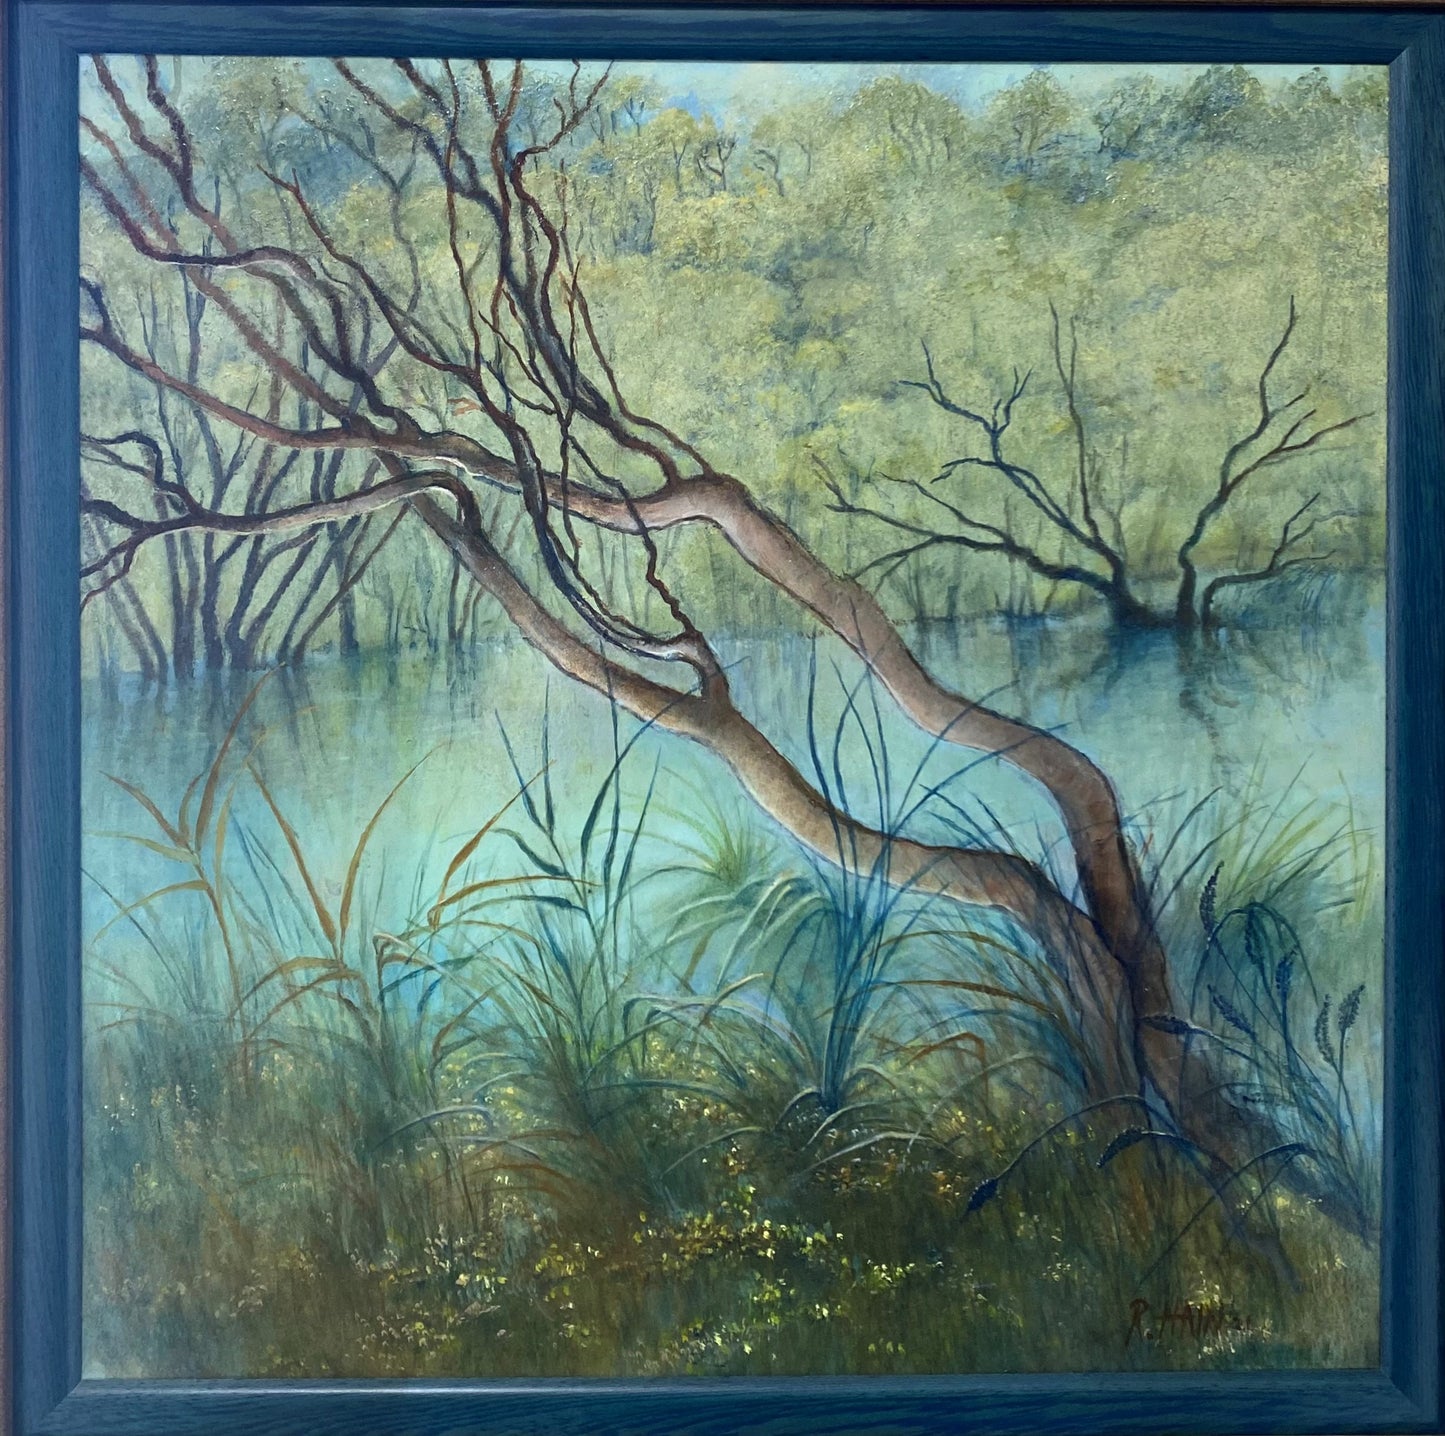 Rosemary Hain - Wetland 2